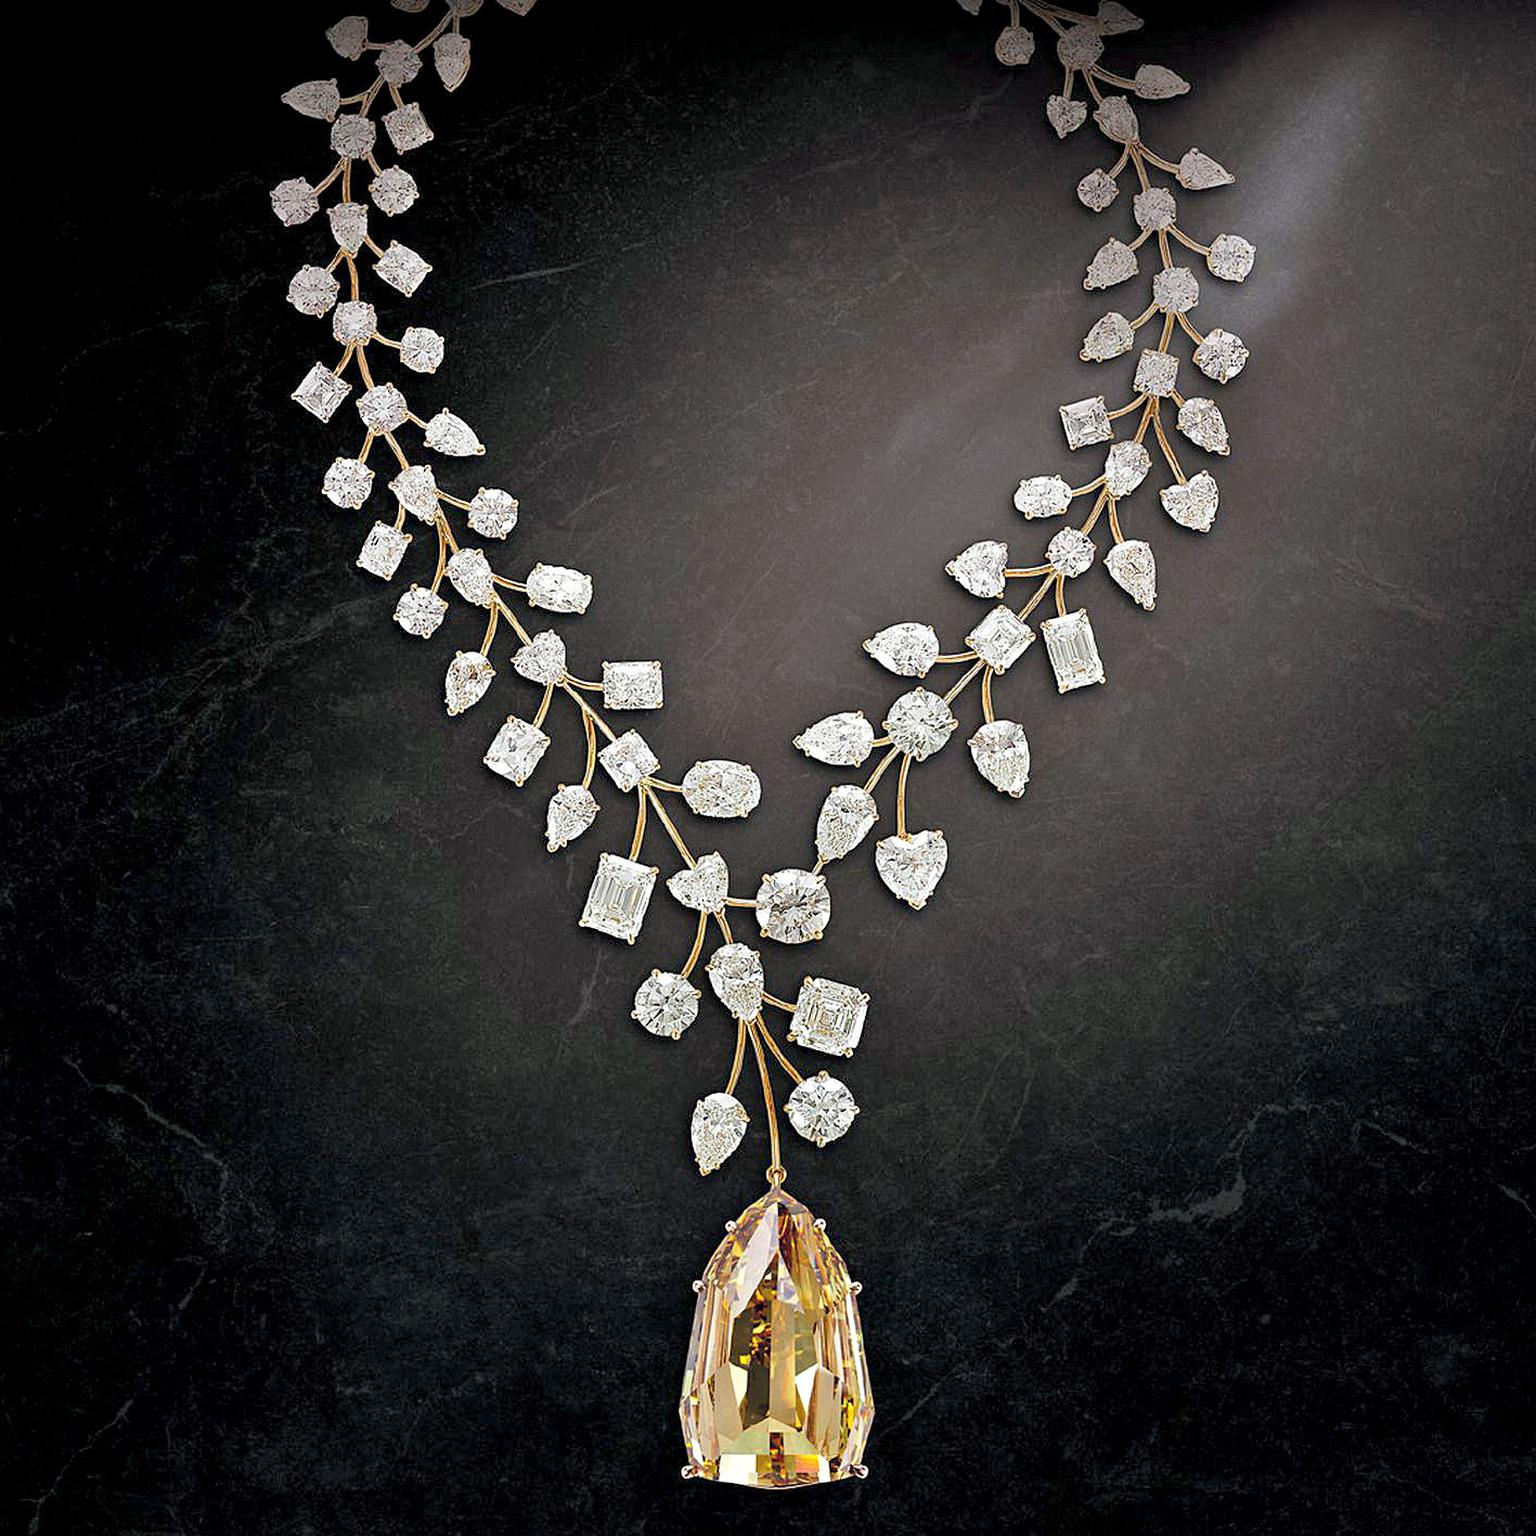 L'Incomparable Diamond Necklace | Photo from thejewelleryeditor.com | http://www.thejewelleryeditor.com/media/images_thumbnails/filer_public_thumbnails/filer_public/6a/c0/6ac0955e-a066-4999-9a55-beb3e5bad056/mouawad_incomparable_diamond_necklace.jpg__1536x0_q75_crop-scale_subsampling-2_upscale-false.jpg